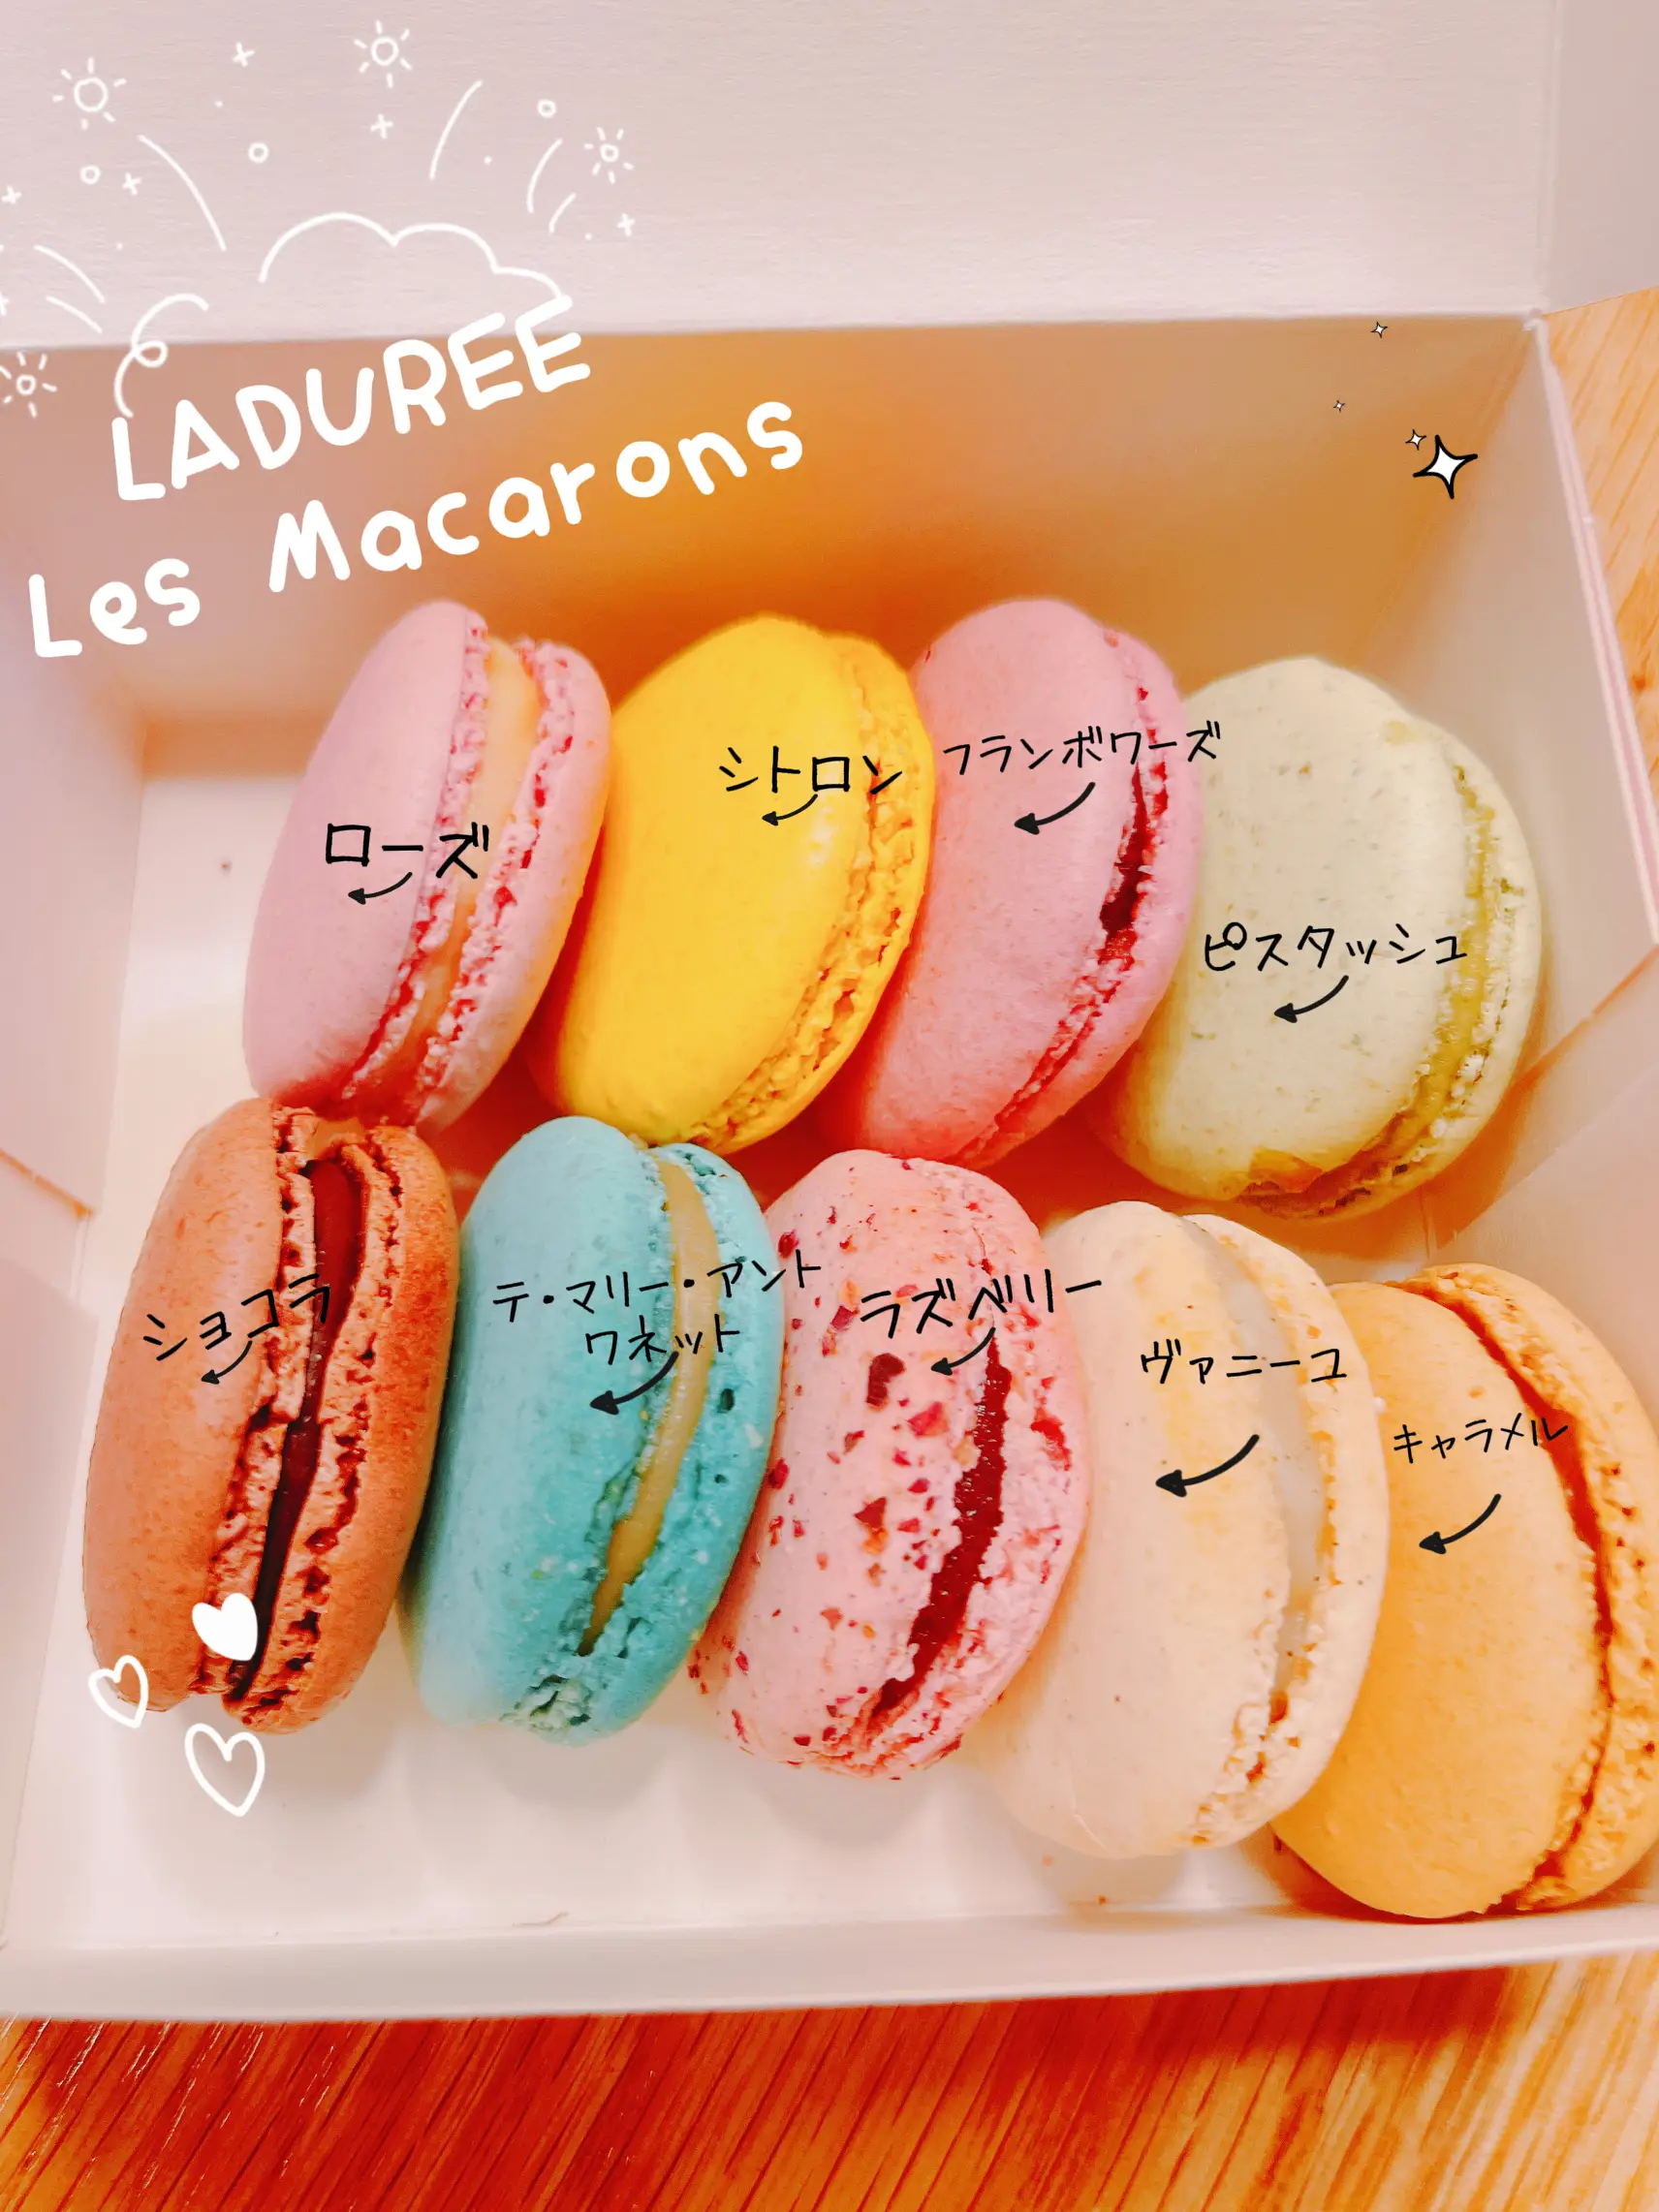 Ladurée Macaron | Gallery posted by ٩(๑❛ᴗ❛๑)۶ | Lemon8